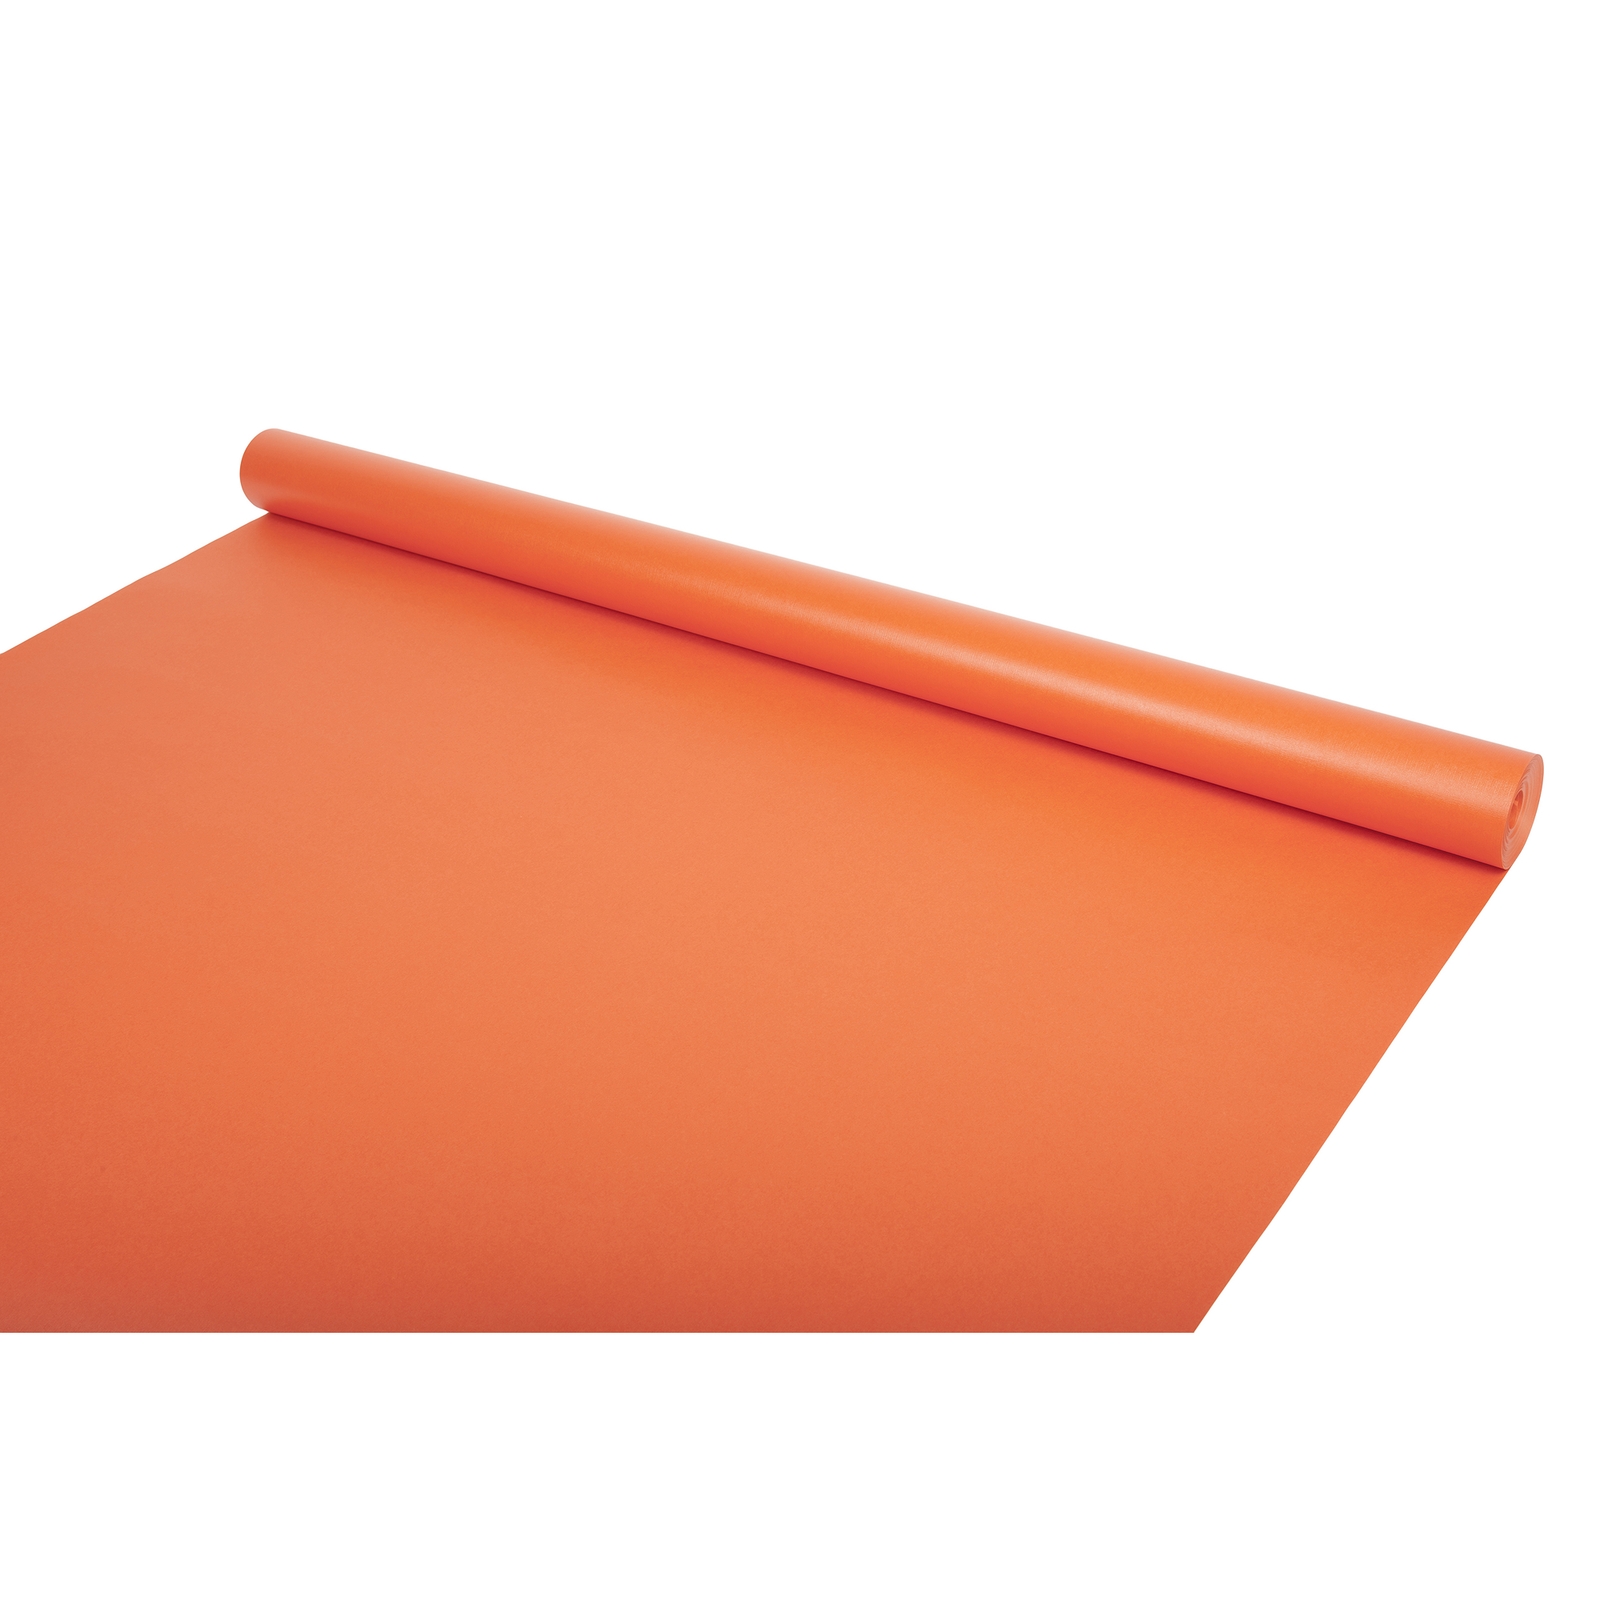 EduCraft Orange Jumbo Durafrieze Poster Display Roll - 1020mm x 25m - Each